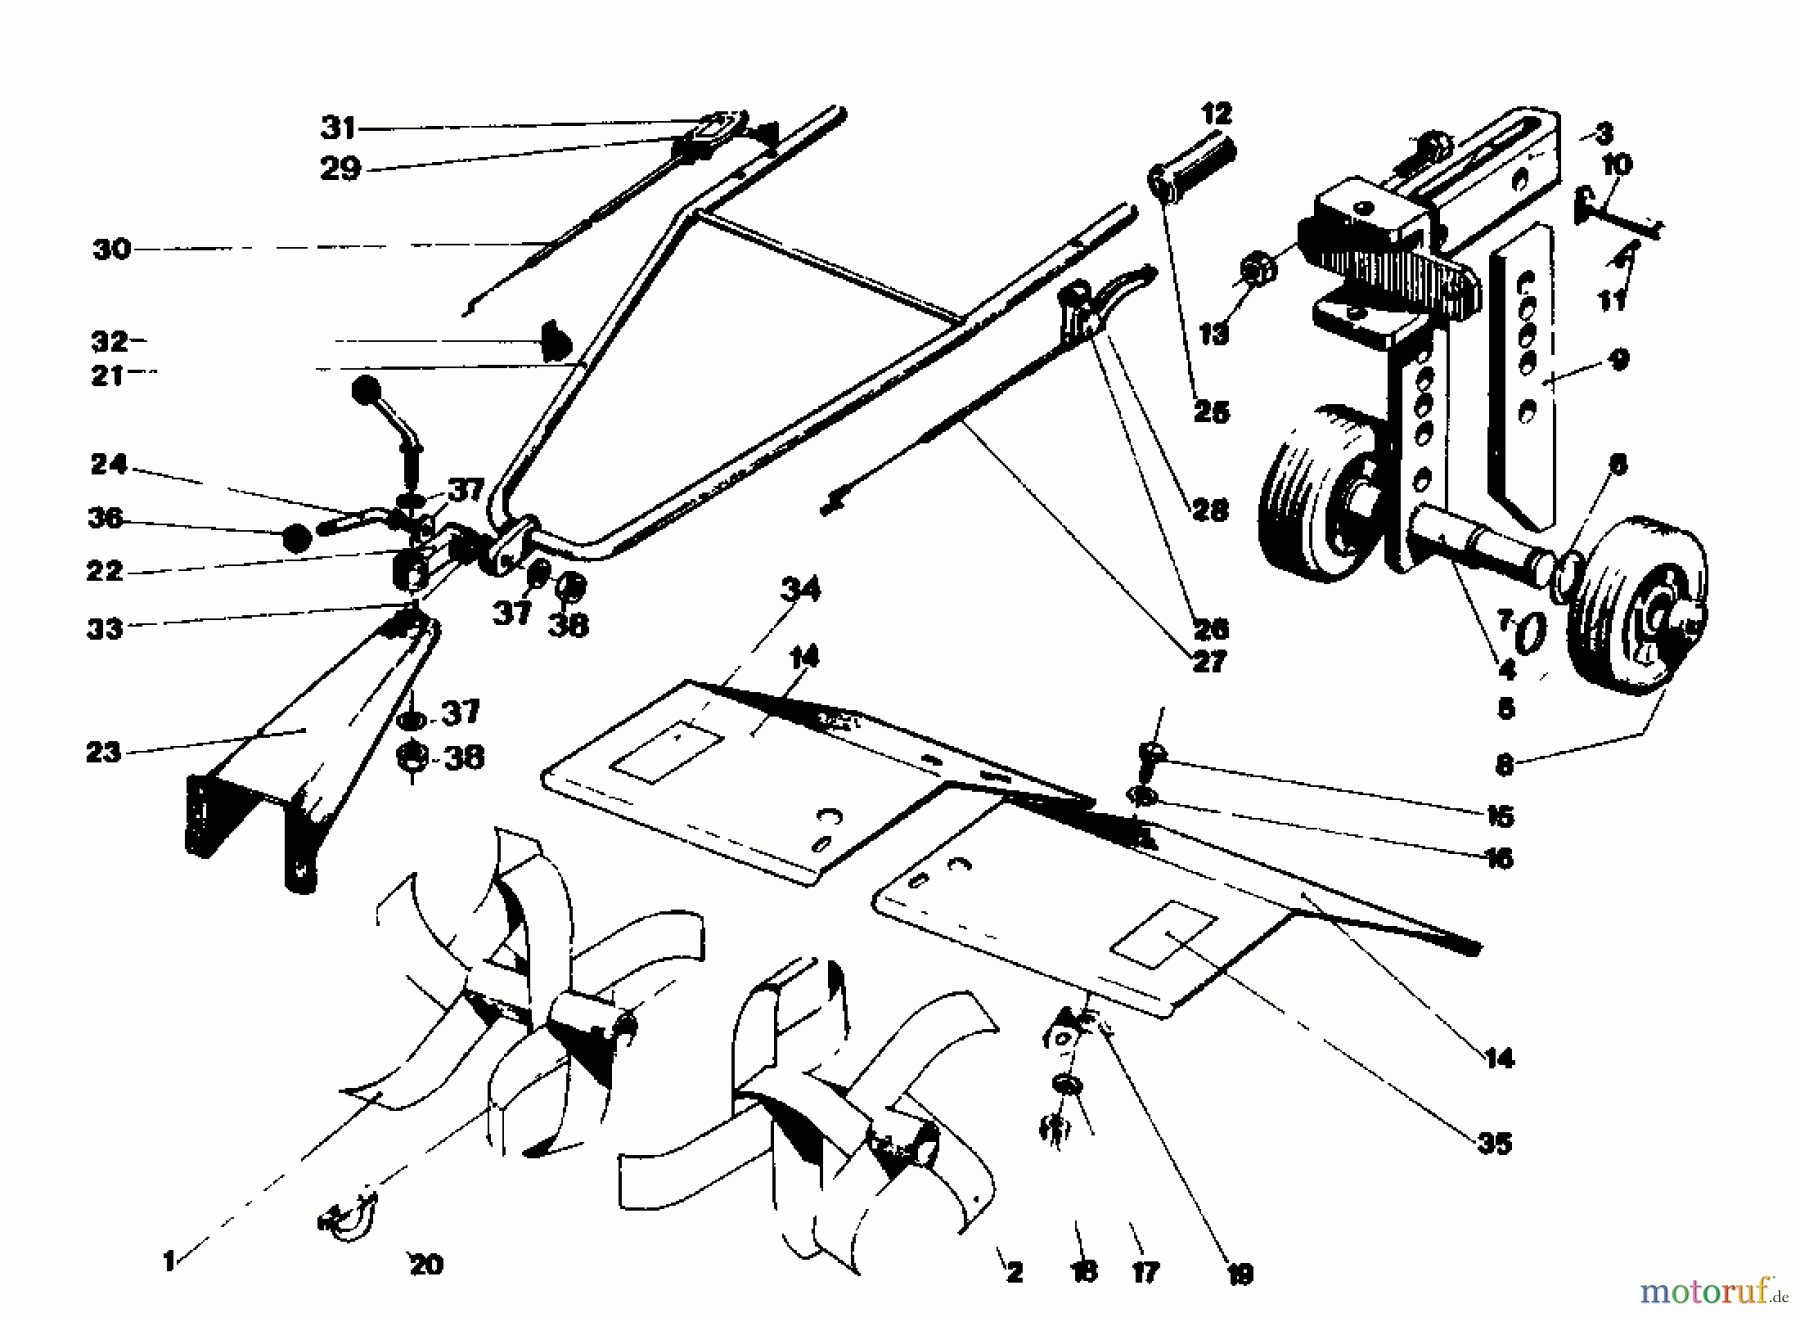  Gutbrod Tillers MB 60-30 07511.07  (1985) Basic machine